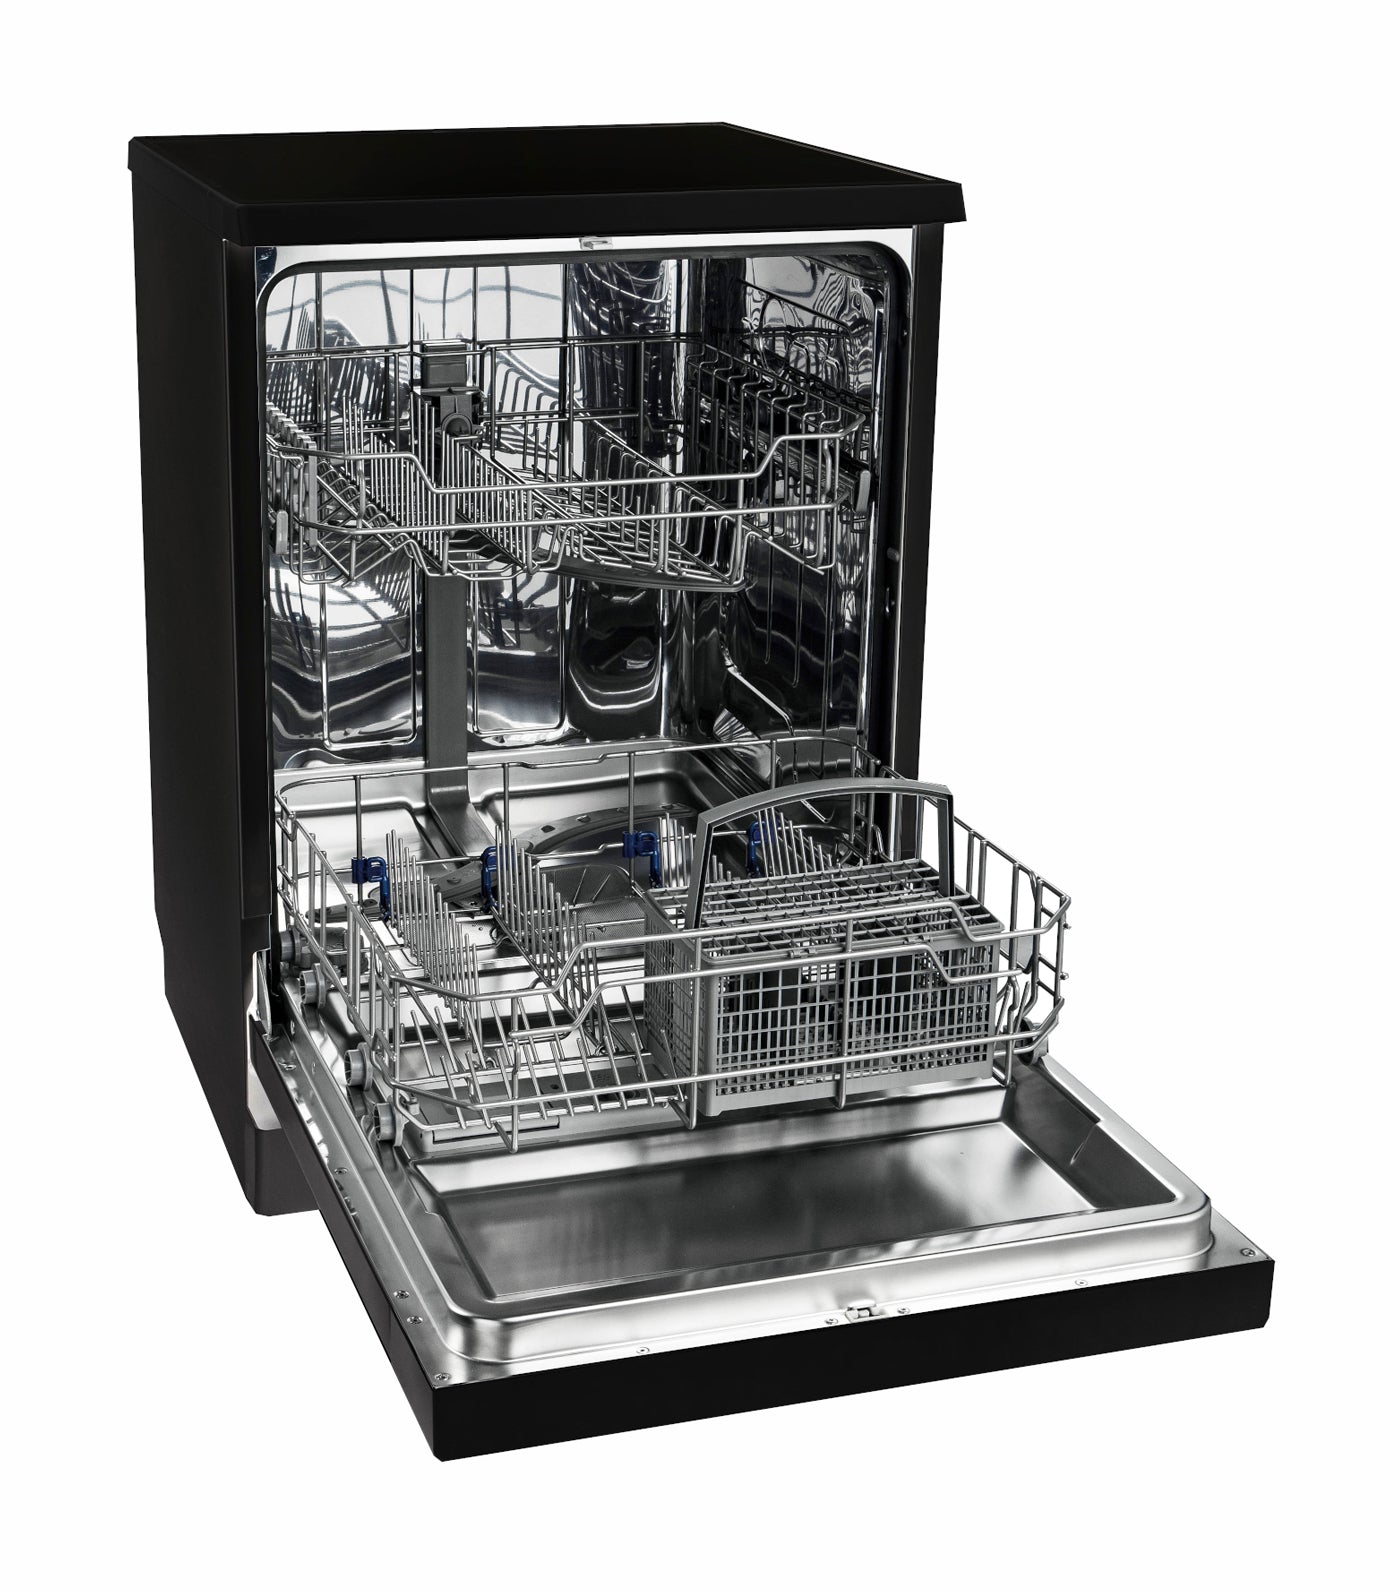 Maximus Freestanding Dishwasher - Black